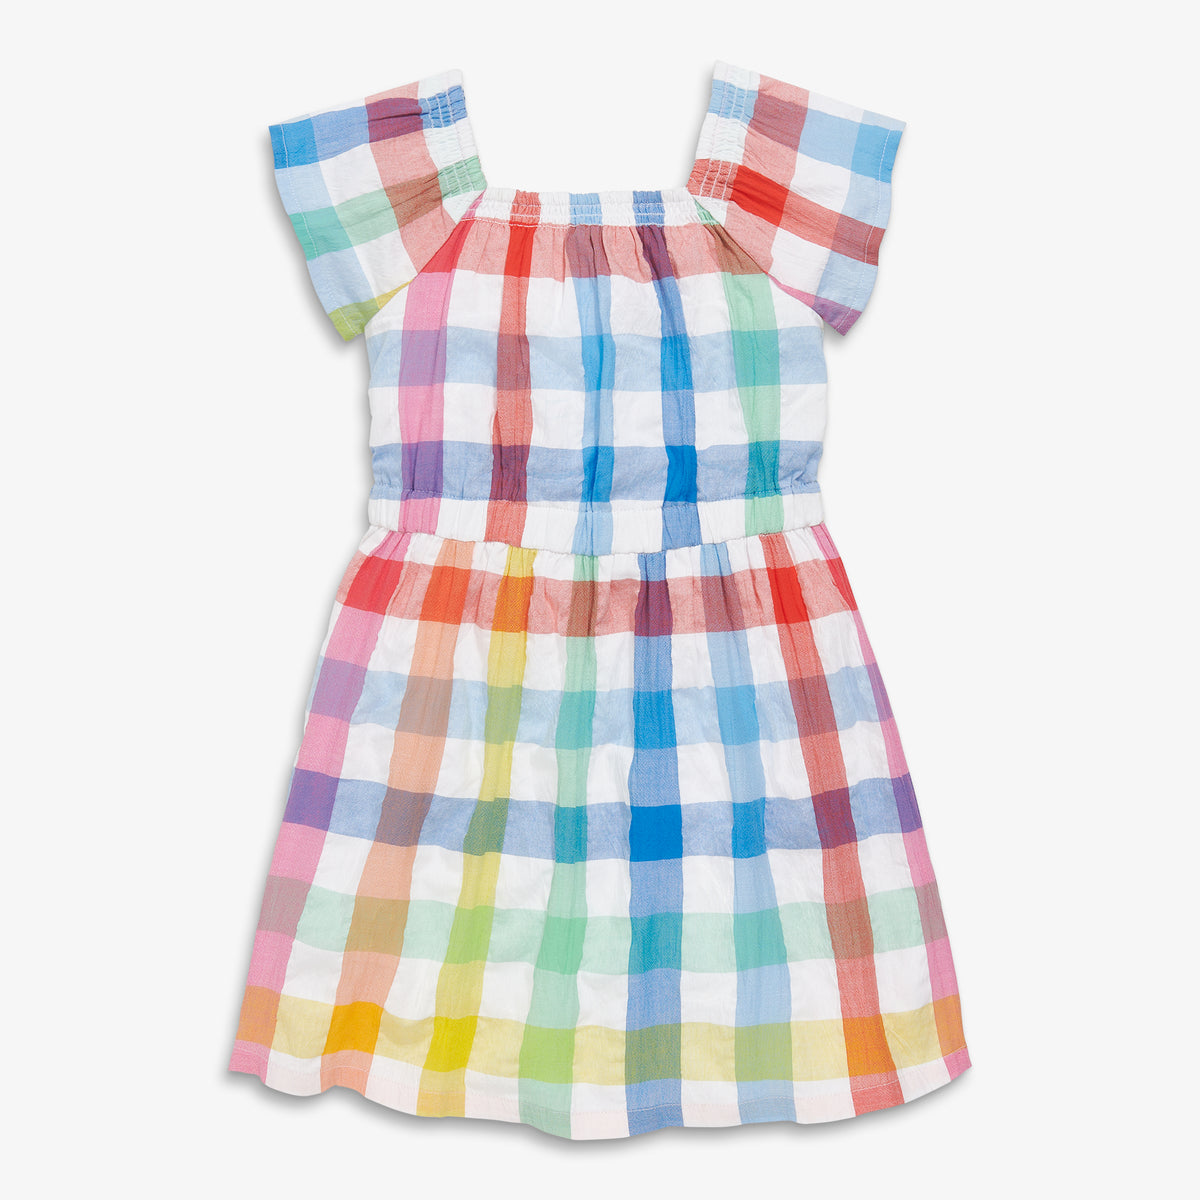 Picnic dress in rainbow gingham | Primary.com